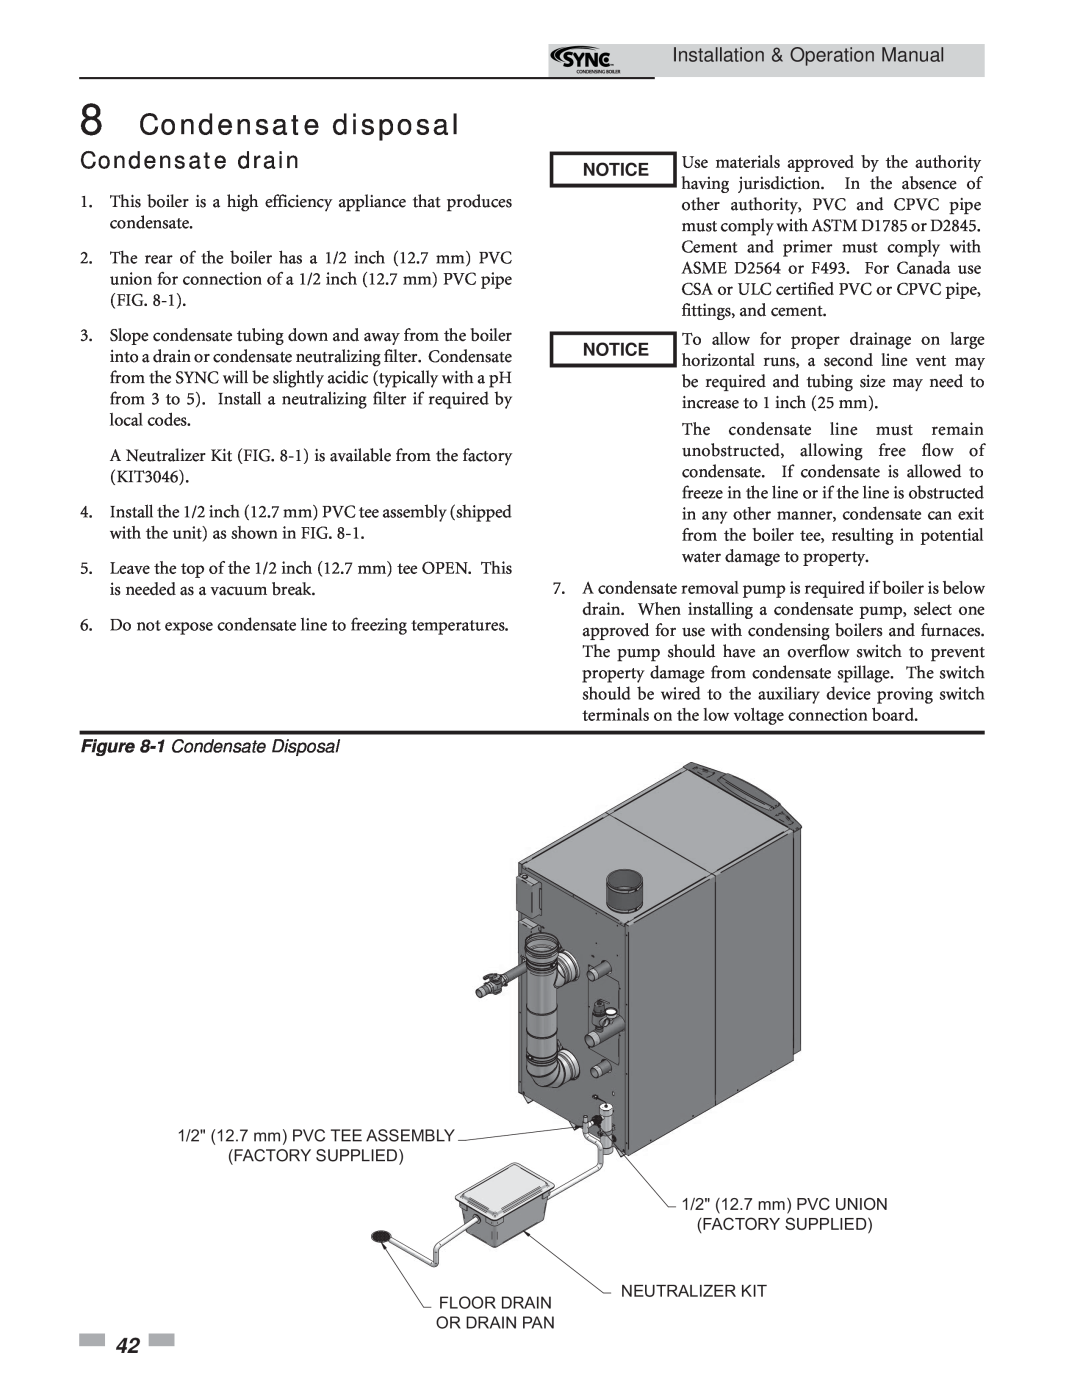 Lochinvar 5 operation manual Condensate disposal, Condensate drain, 1 Condensate Disposal, Notice 